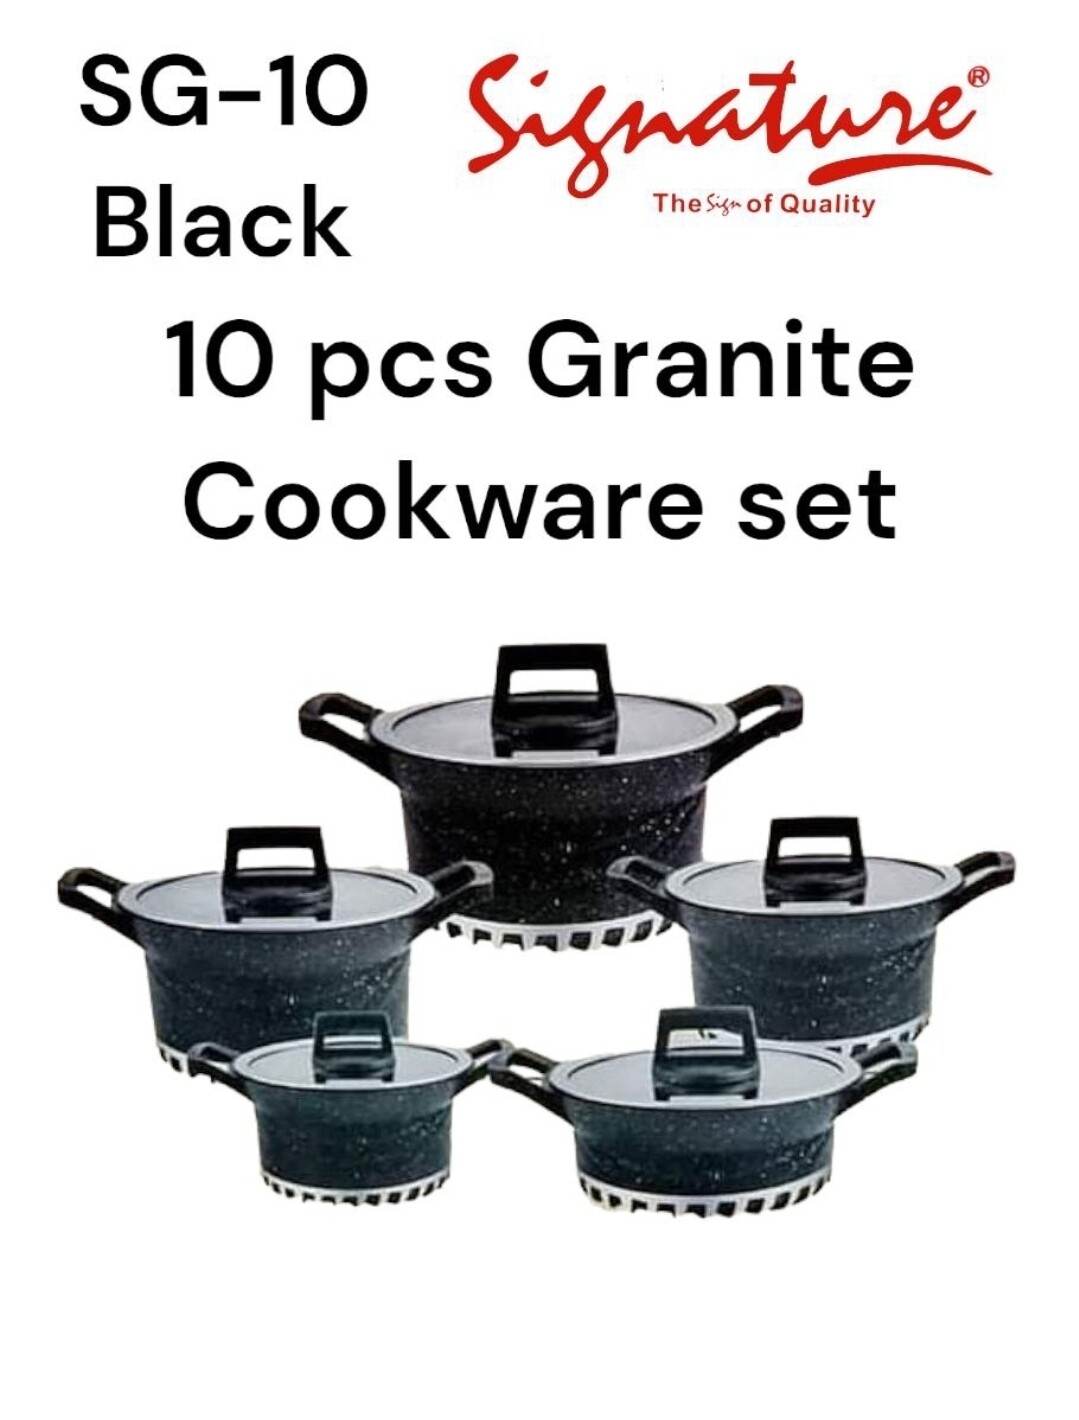 Signature 10pcs granite cookware set black SG-10